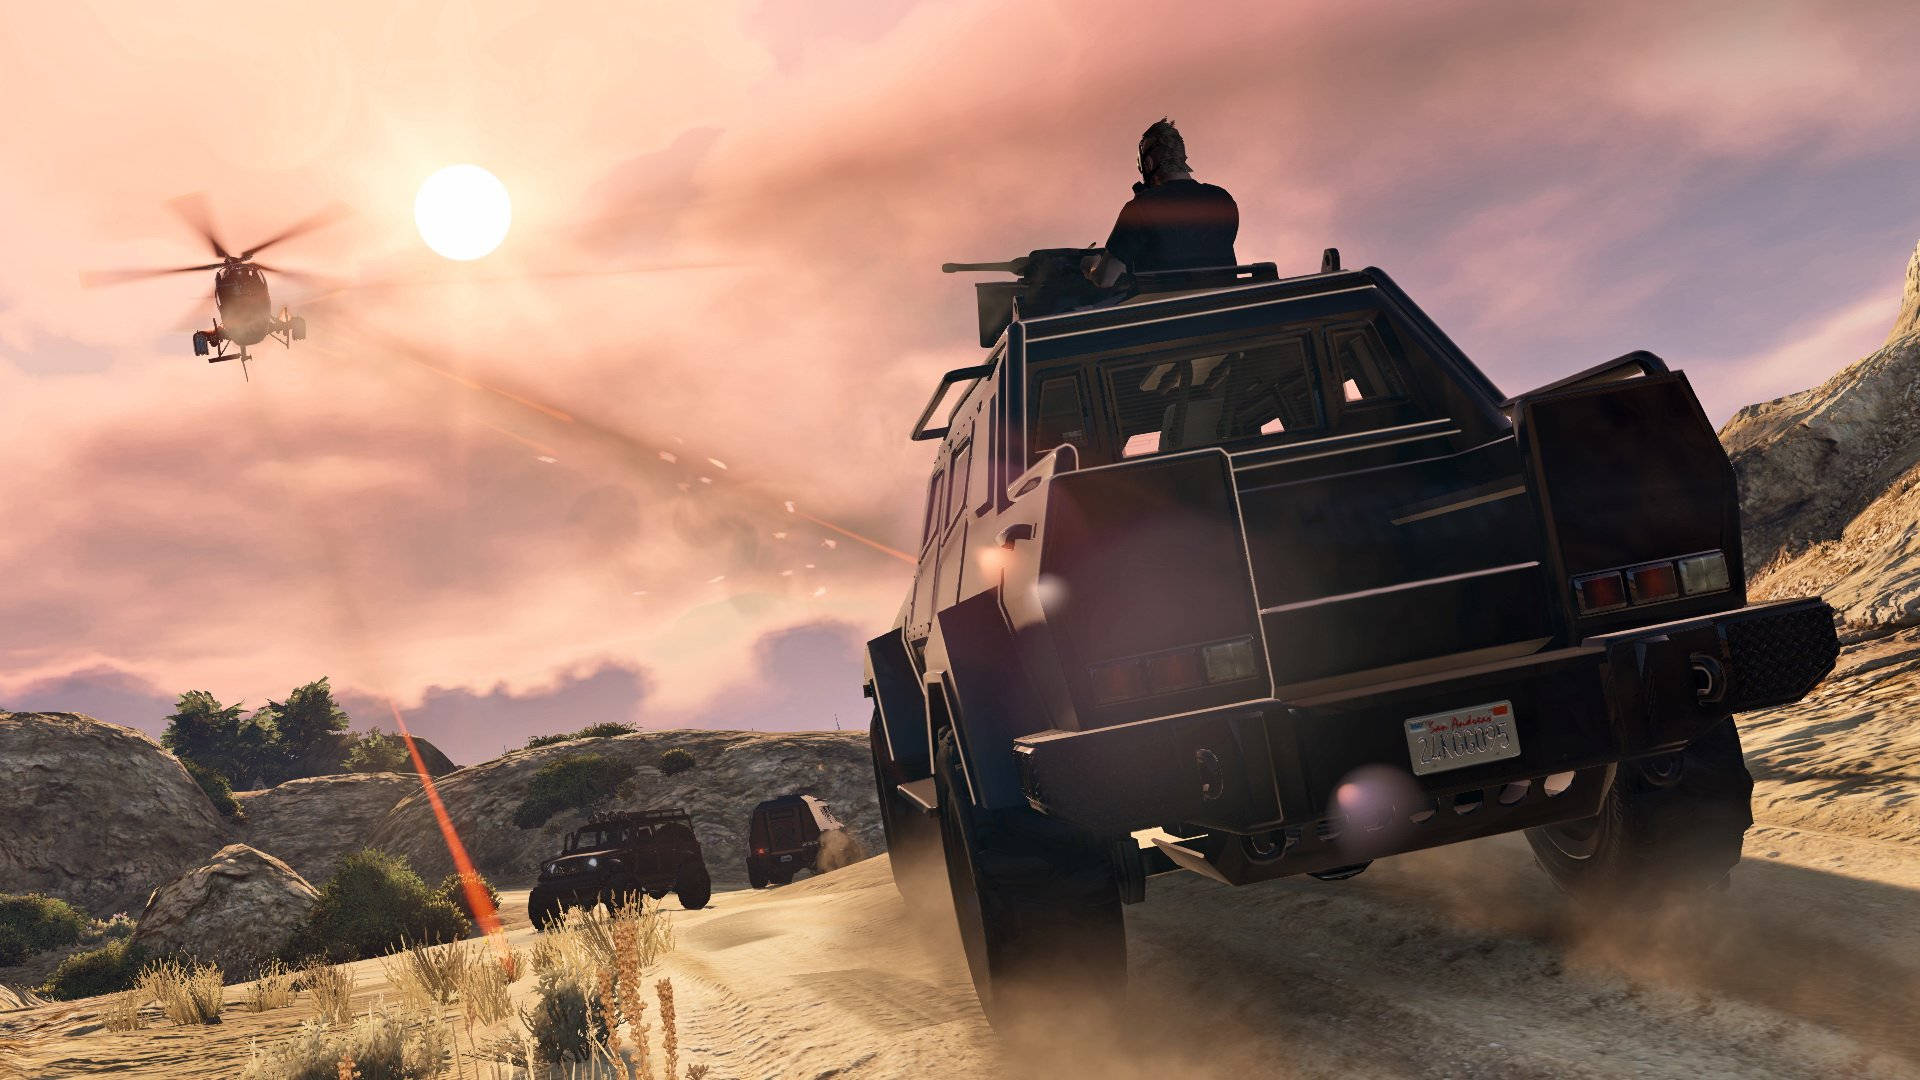 Grand Theft Auto V Suv Vs. Helicopter Background